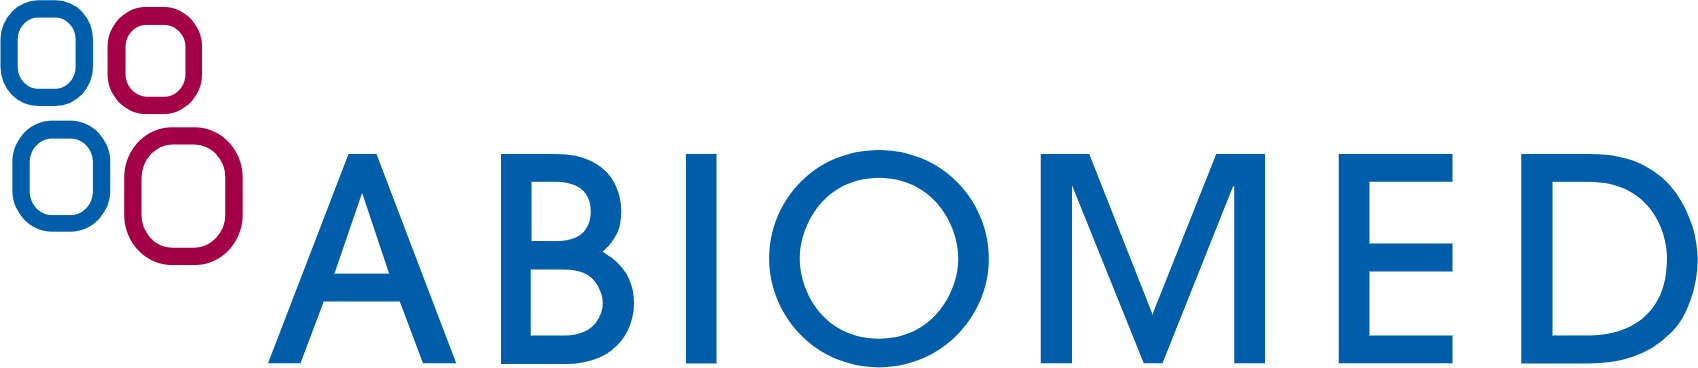 Abiomed logo large (transparent PNG)